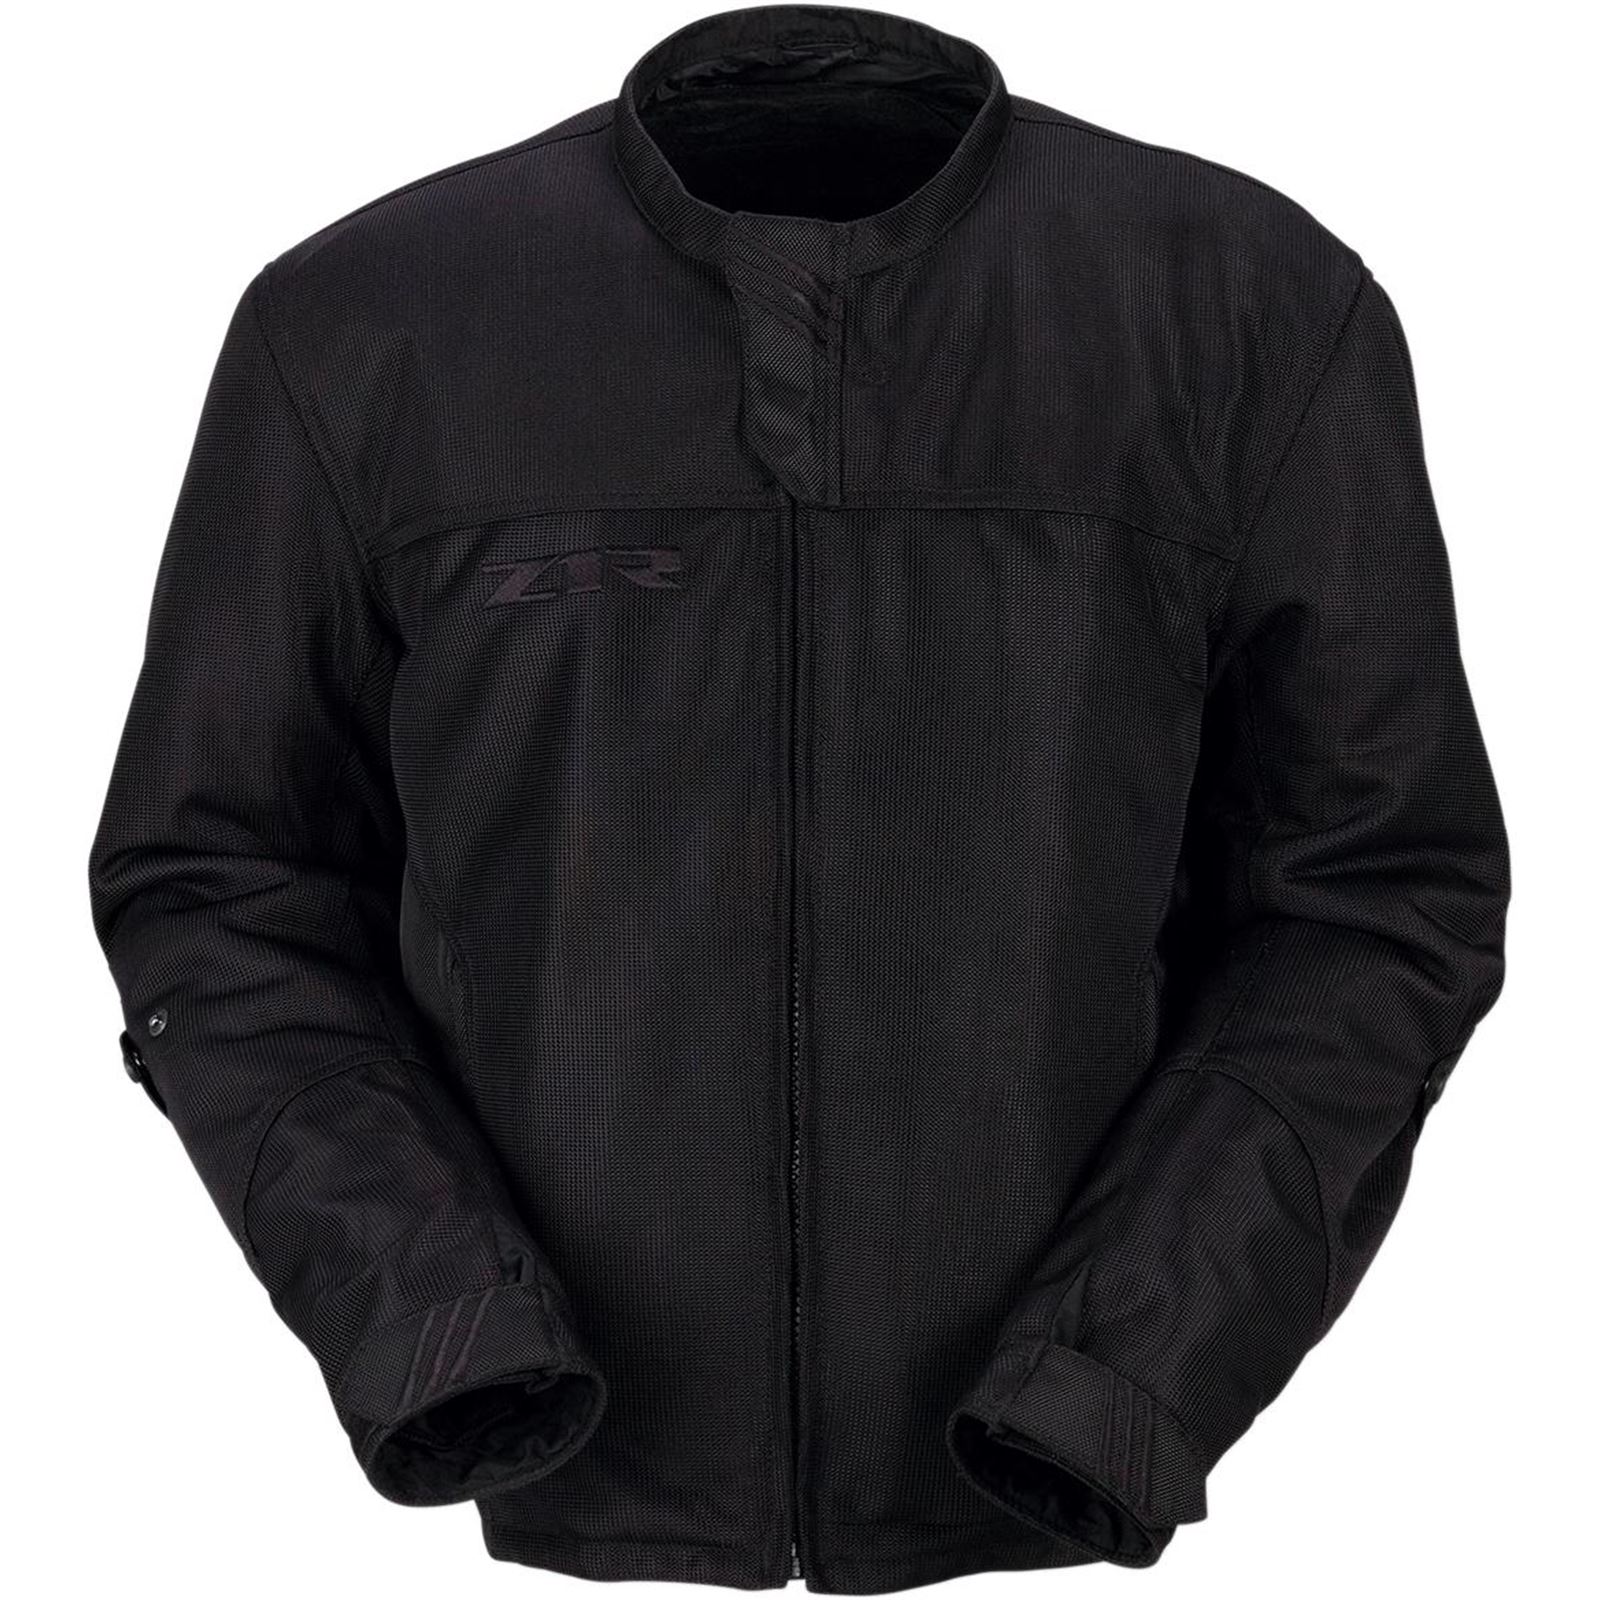 Z1R Gust Mesh Waterproof Jacket - Black - Small